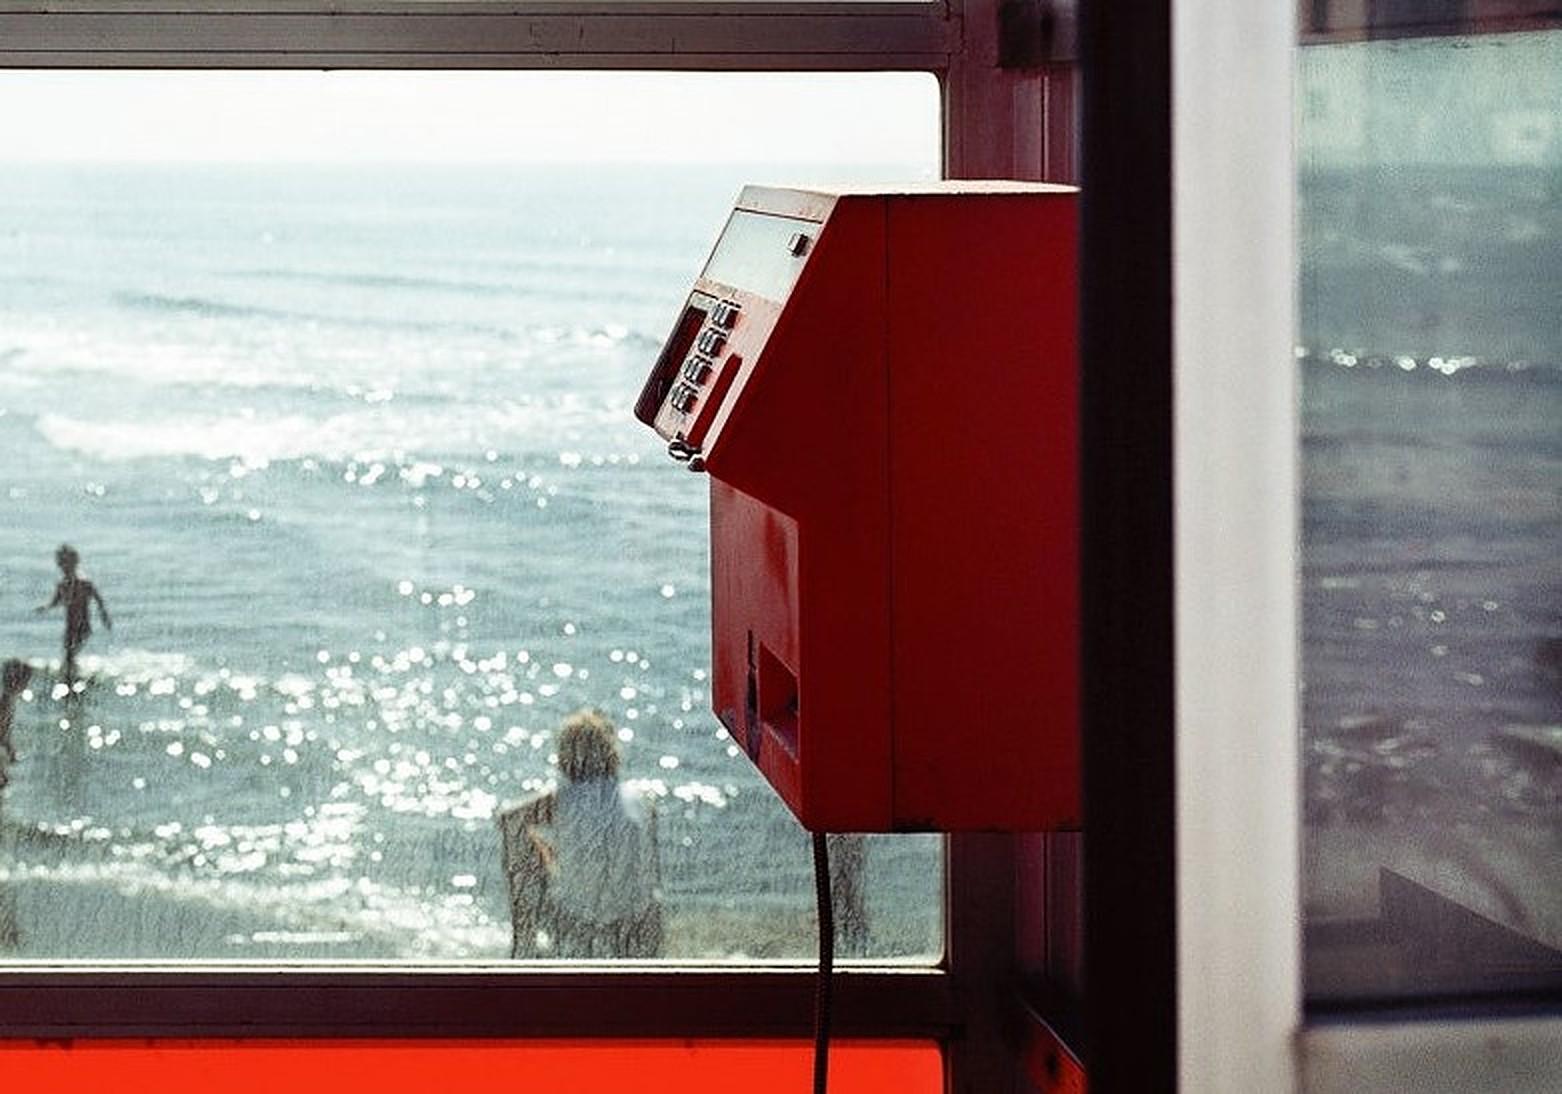 Telecom Italia - Photographie de portraits contemporains en soie Morgan, bord de mer, plage - Gris Figurative Photograph par Morgan Silk